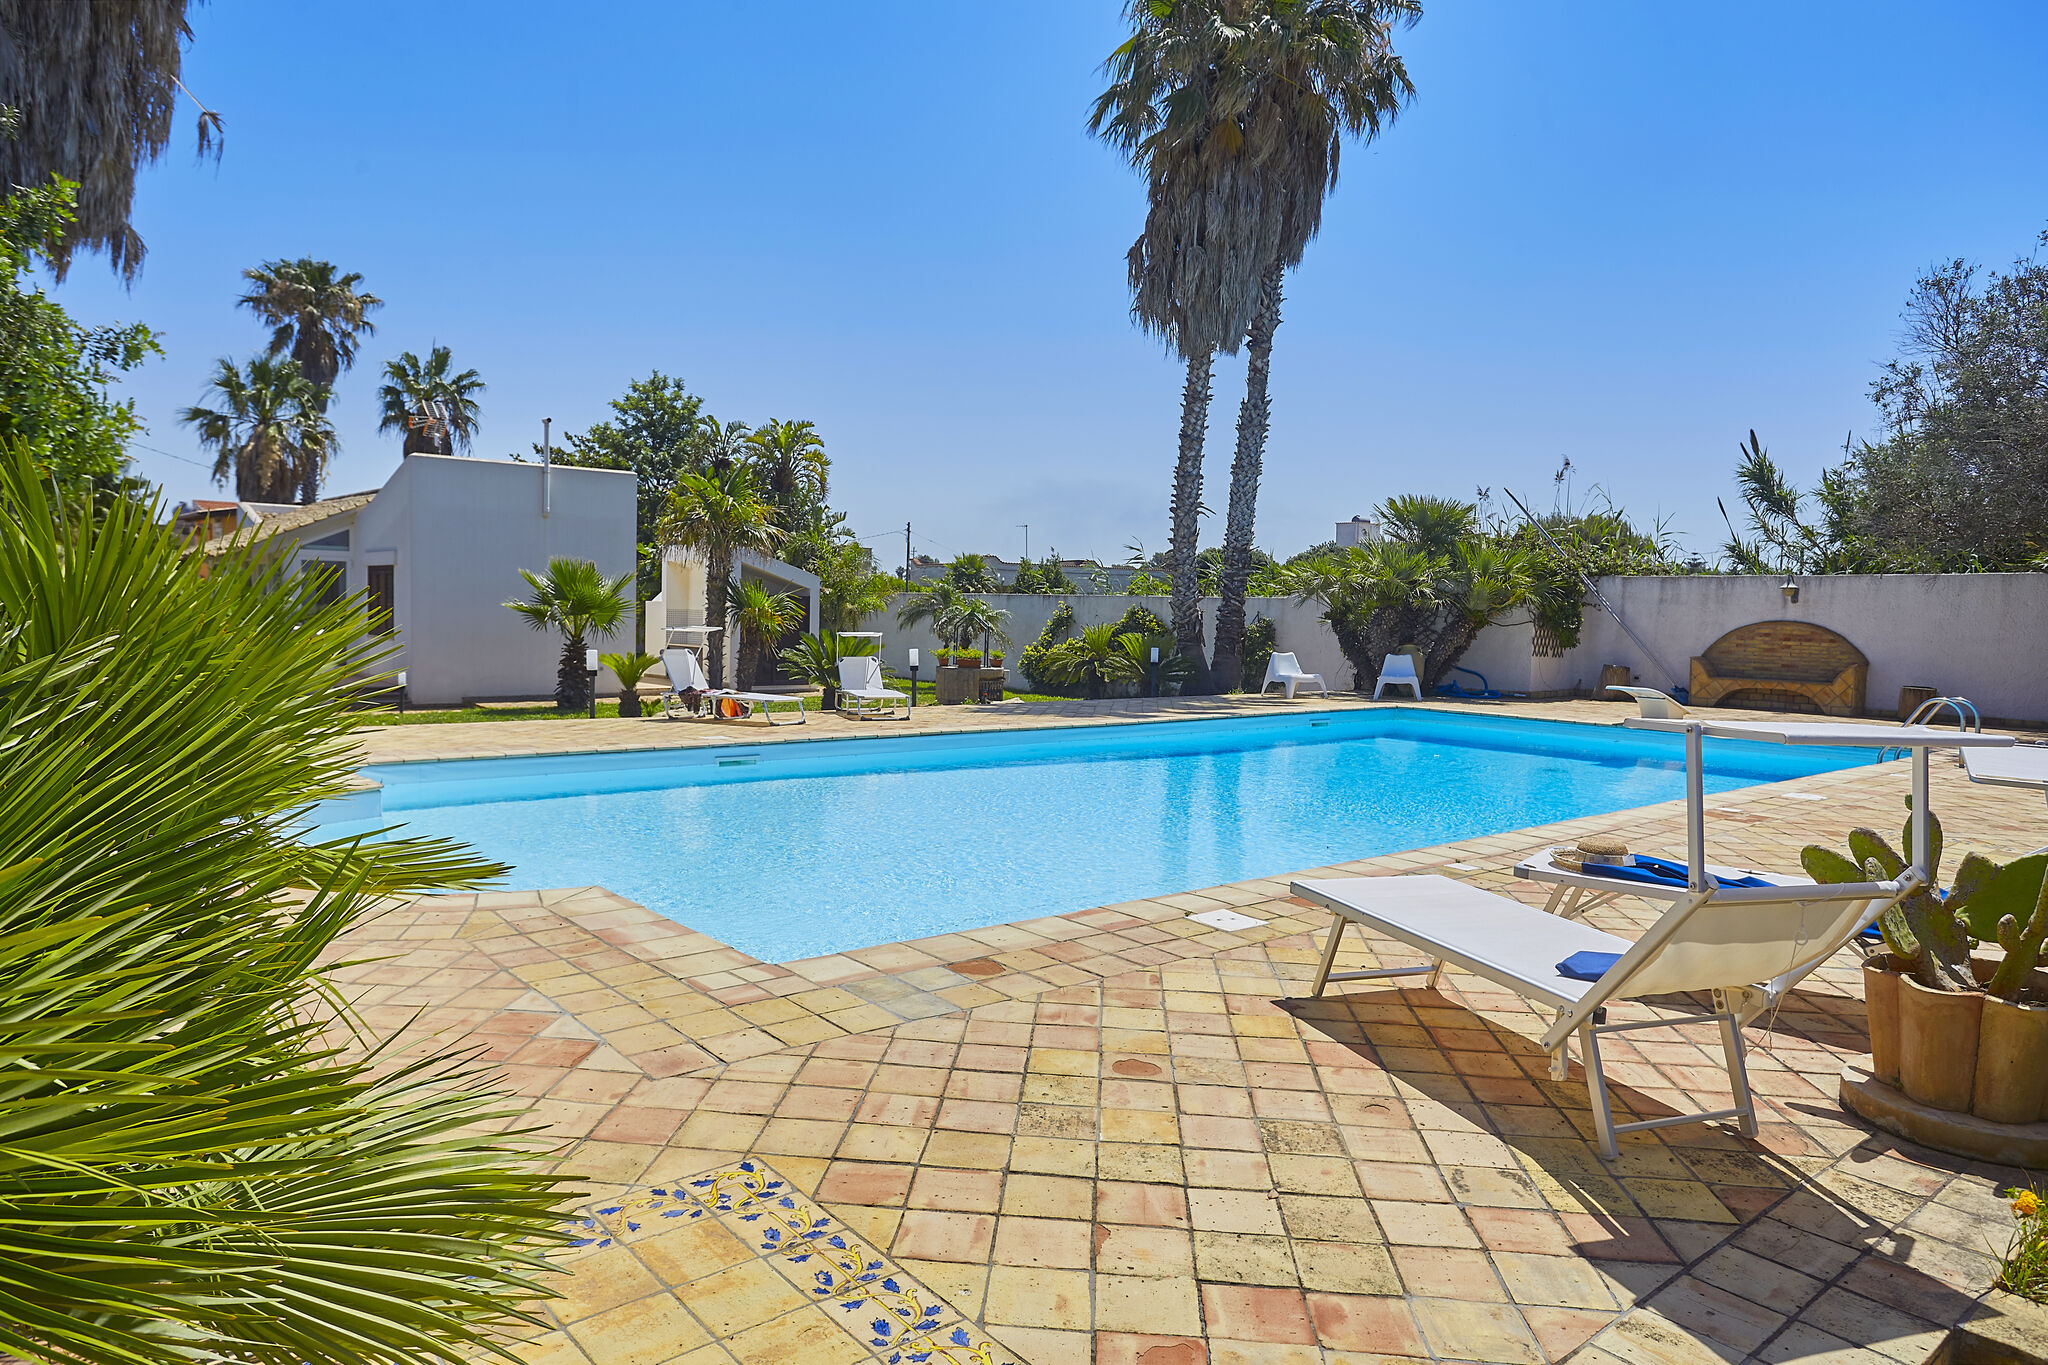 Villa im Grünen mit eigenem Swimmingpool in Marsala Sizilien